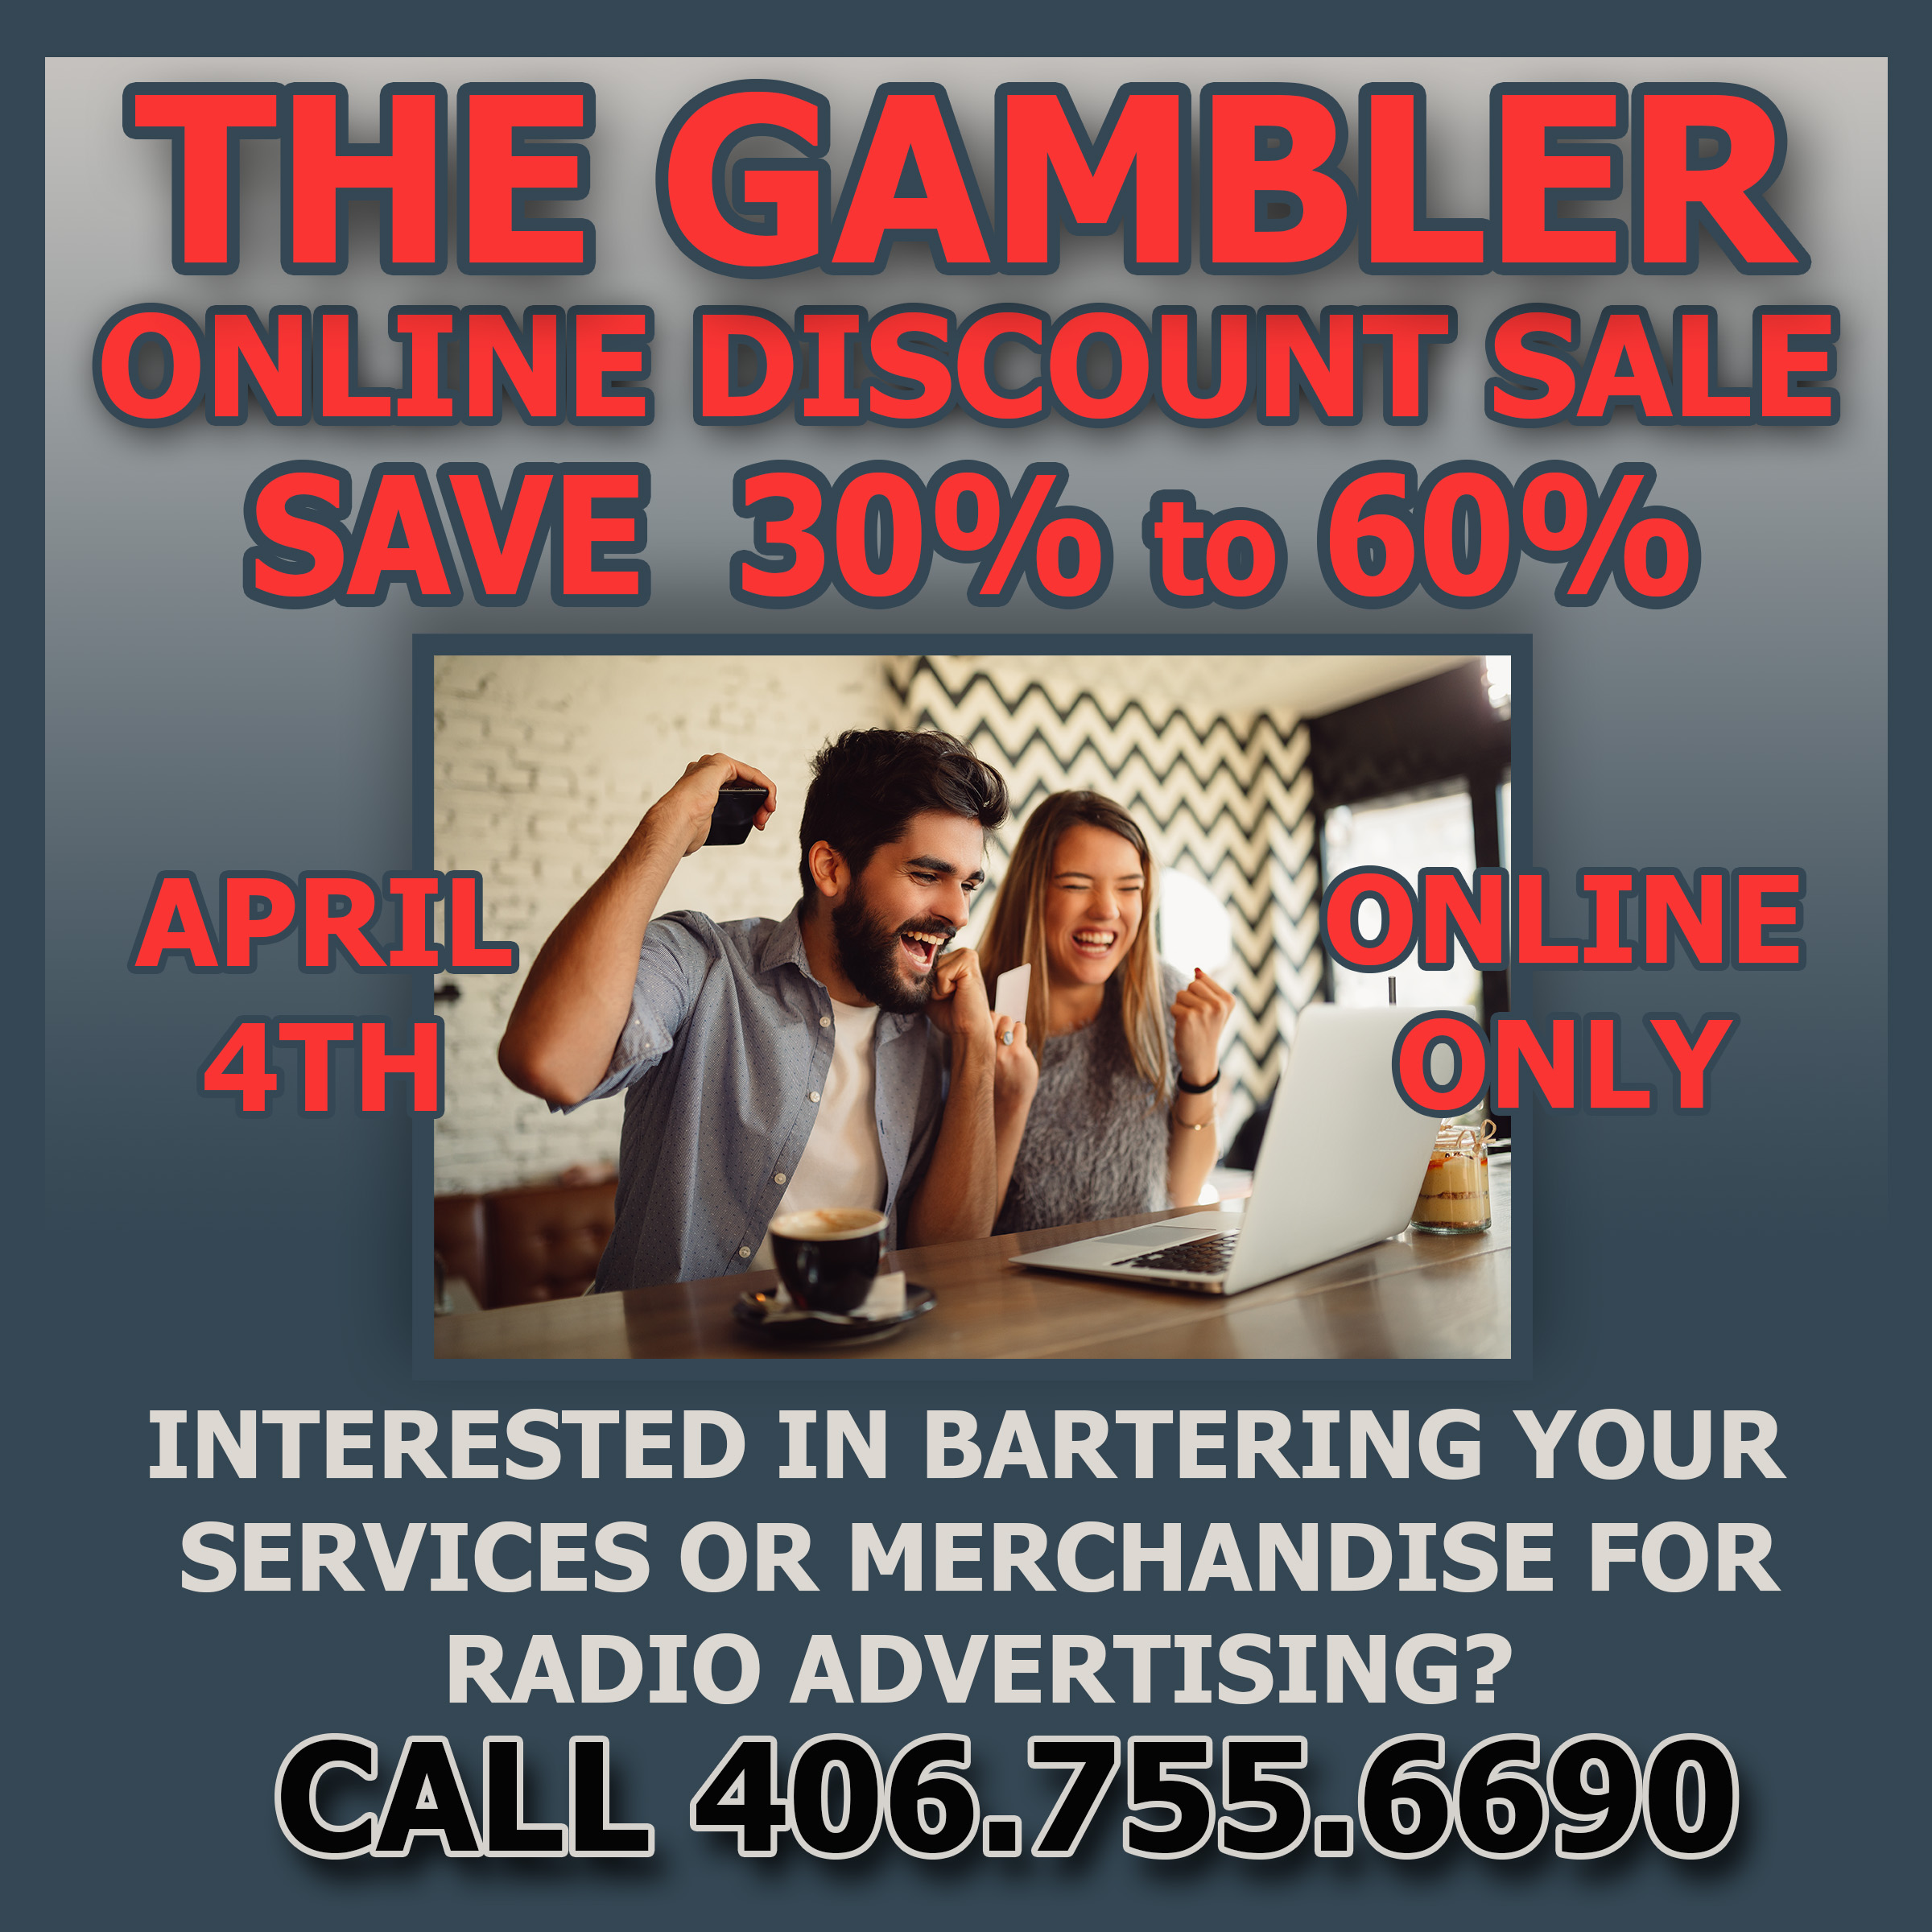 GAMBLER_SALE_BUSINESS